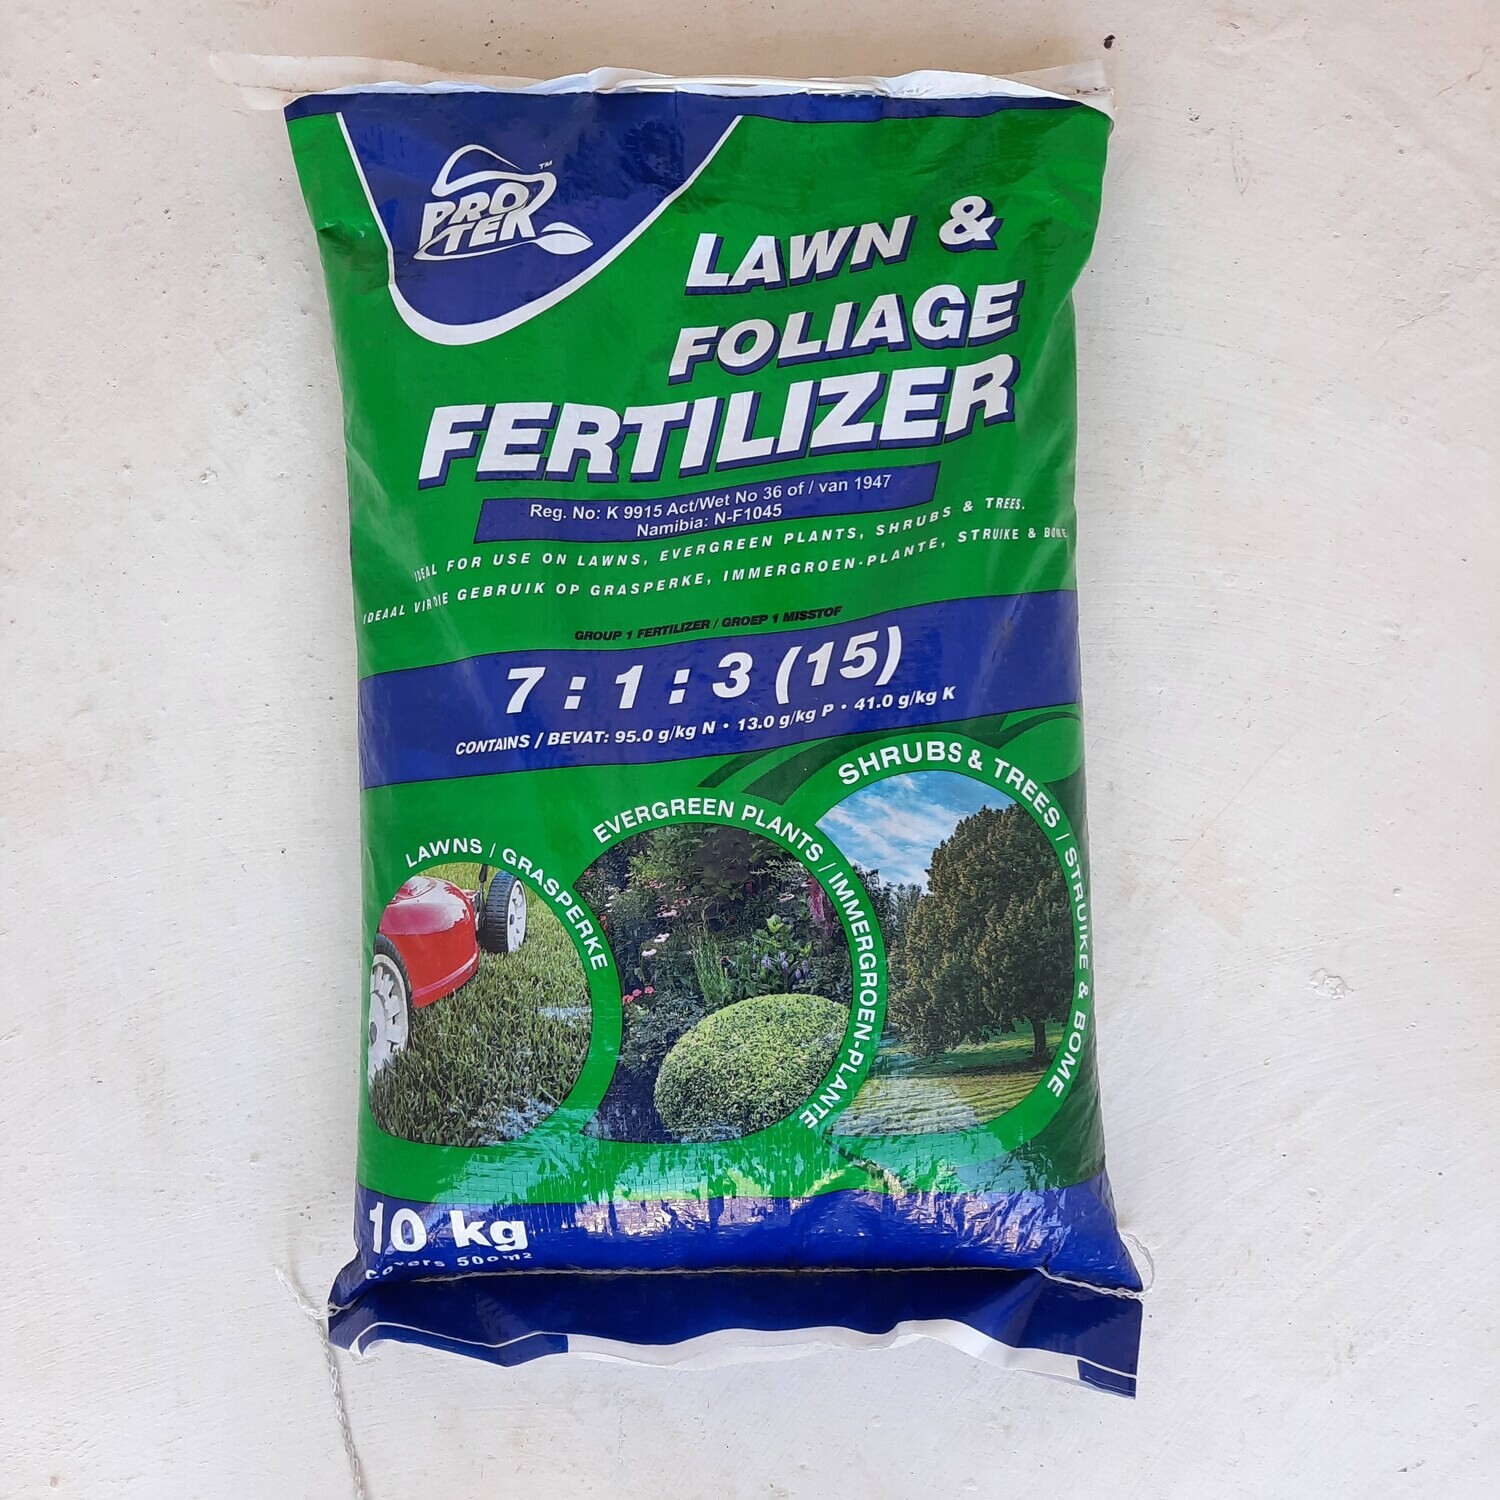 Protek Lawn & Foliage Fertilizer 7:1:3 (15) 10kg